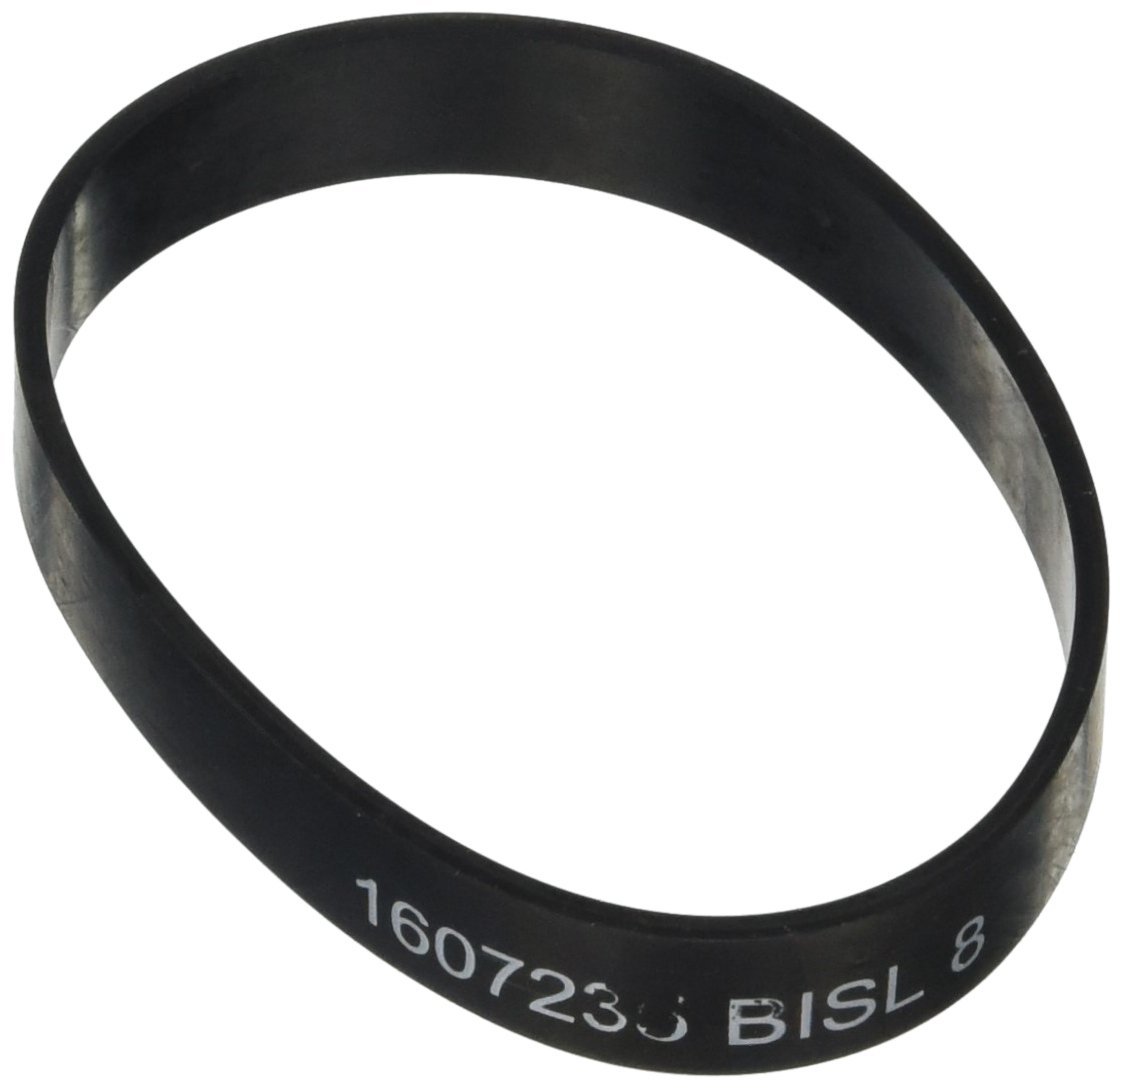 Bissell Smart Details Style 8 Vacuum Belt - $8.04